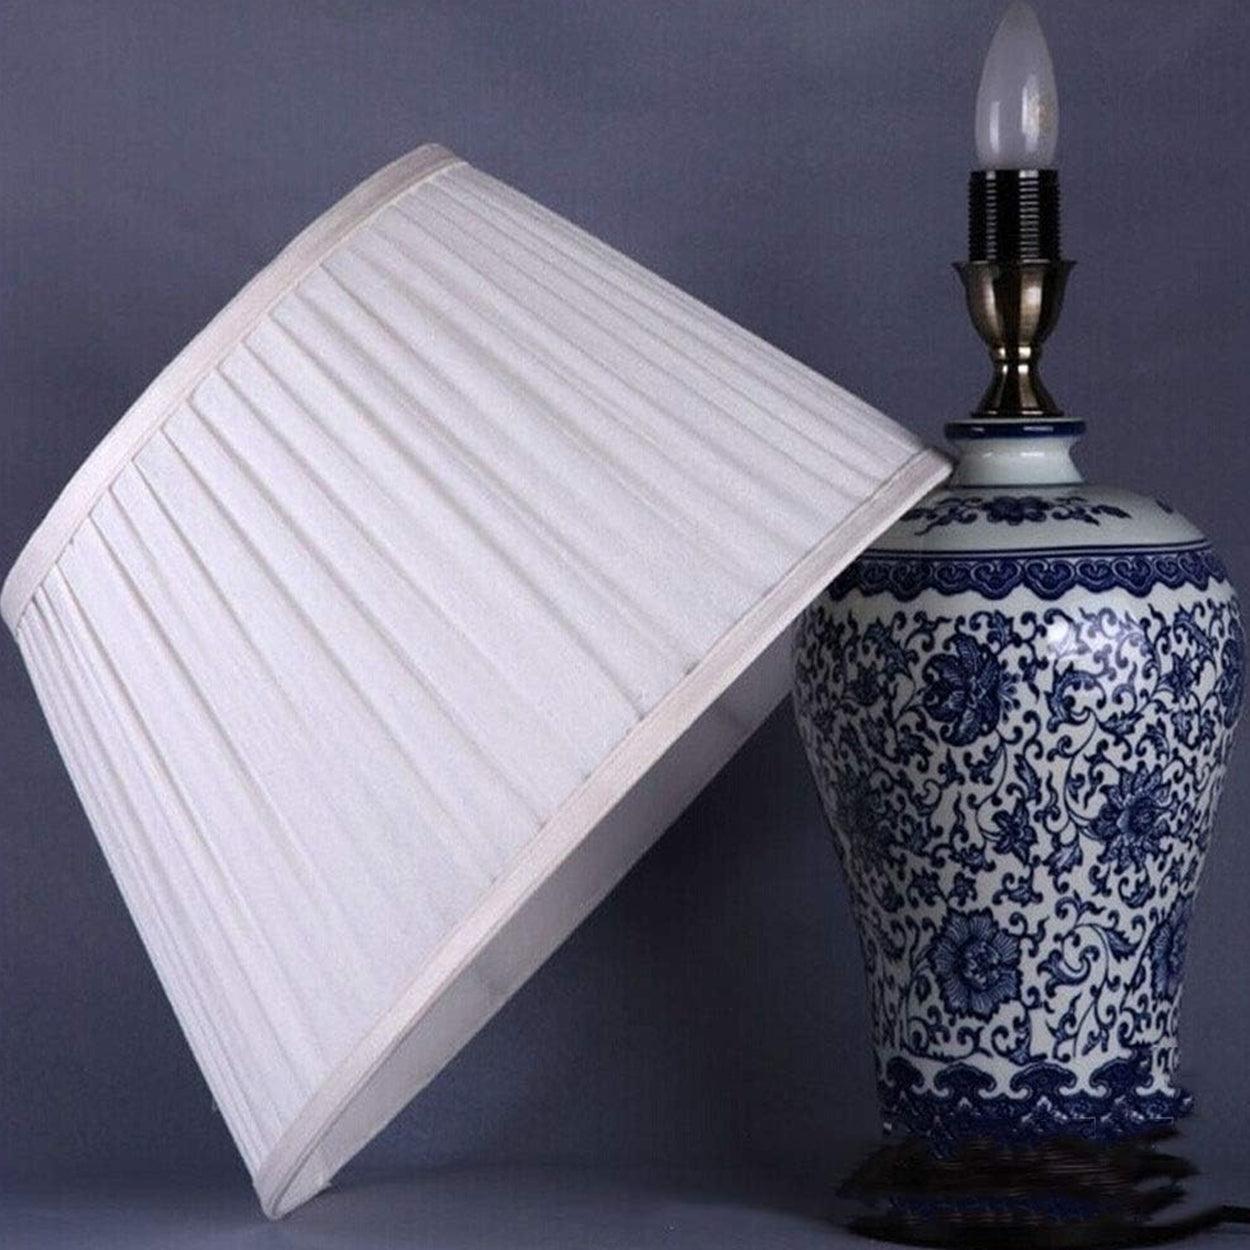 SQUISIT BLUE FLORAL PATTERN CERAMIC TABLE LAMP - Ankur Lighting